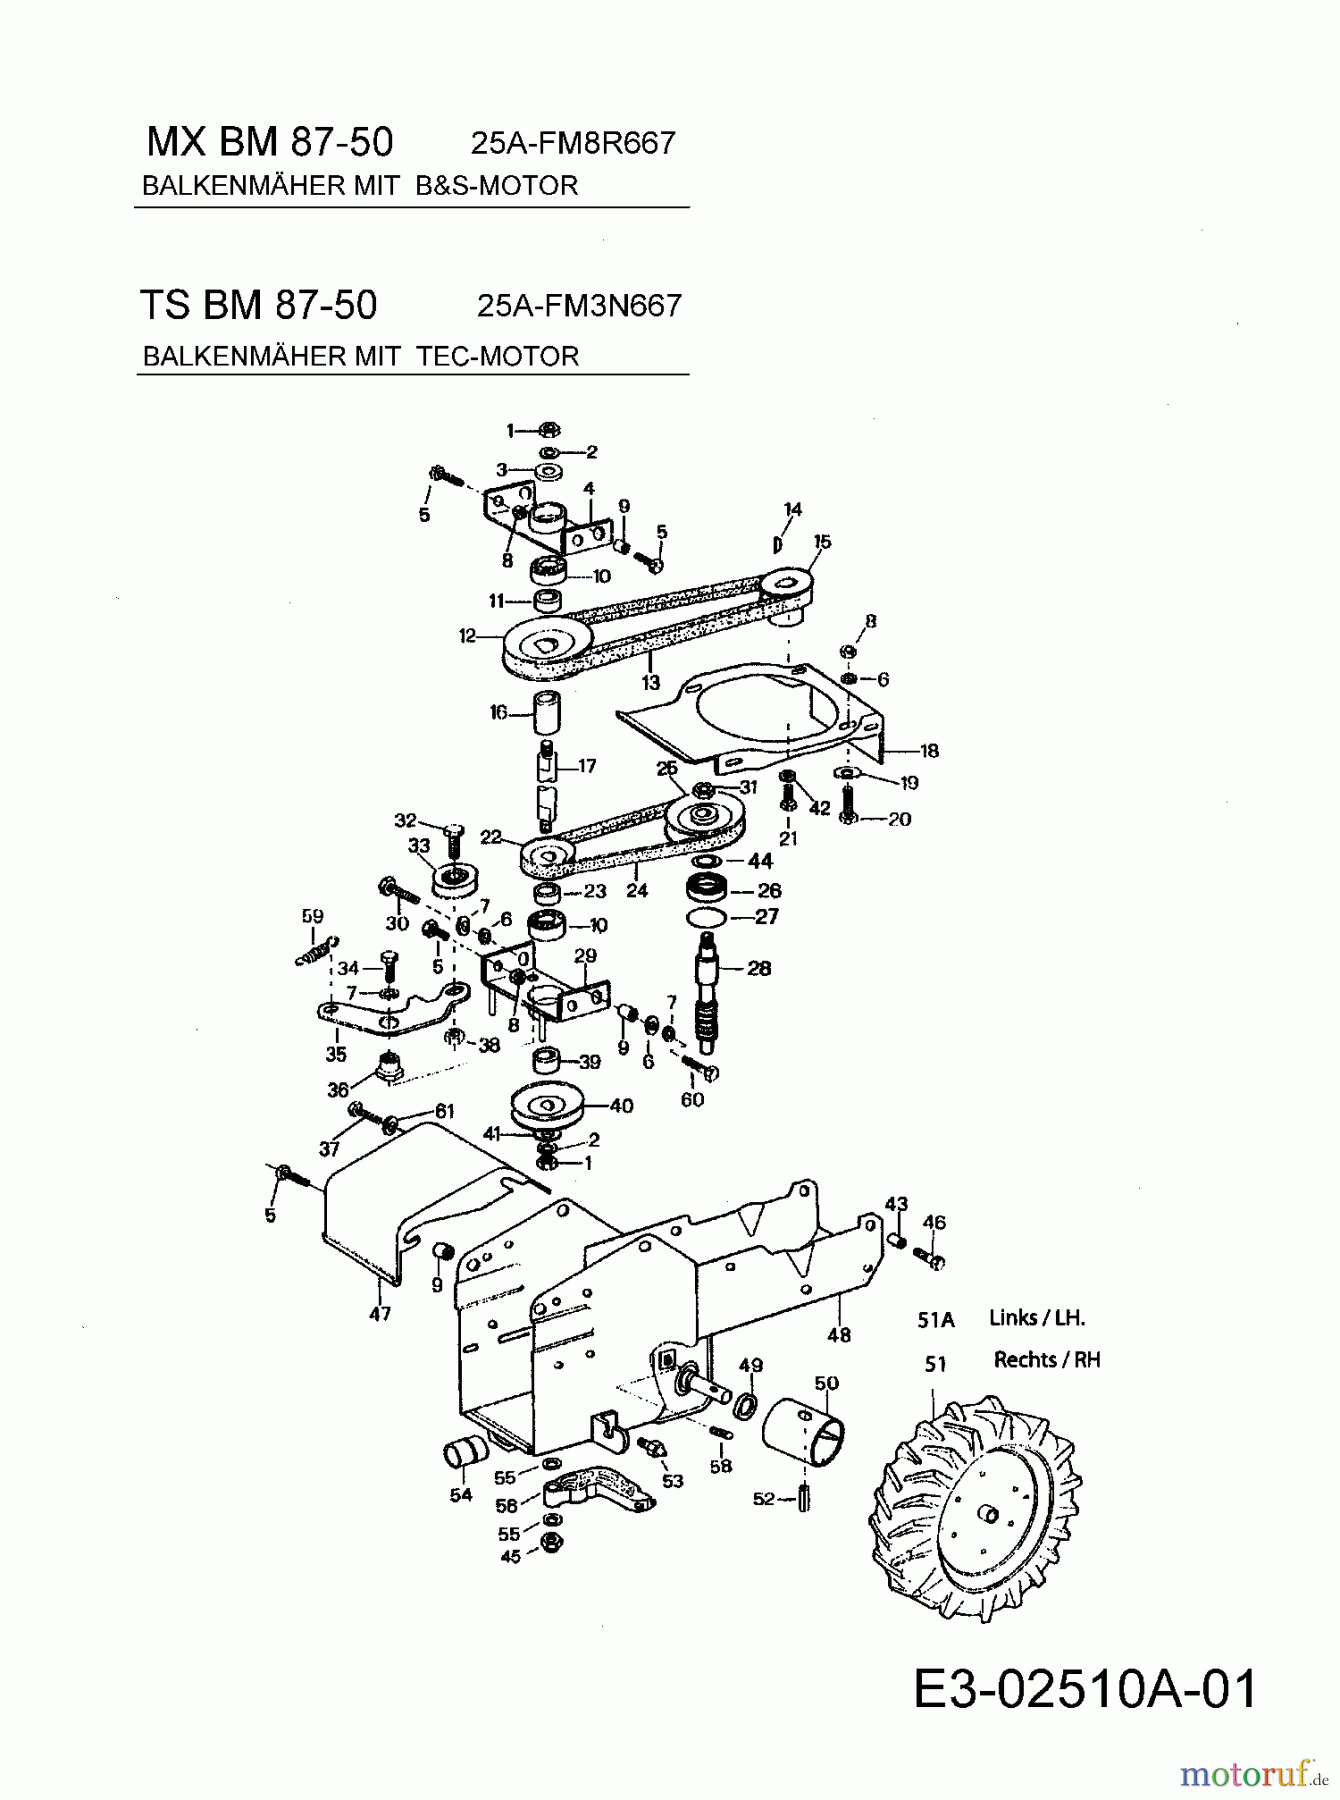  Turbo Silent Cutter bar mower TSBM 87-50 25A-FM3N667  (2006) Drive system, Wheels